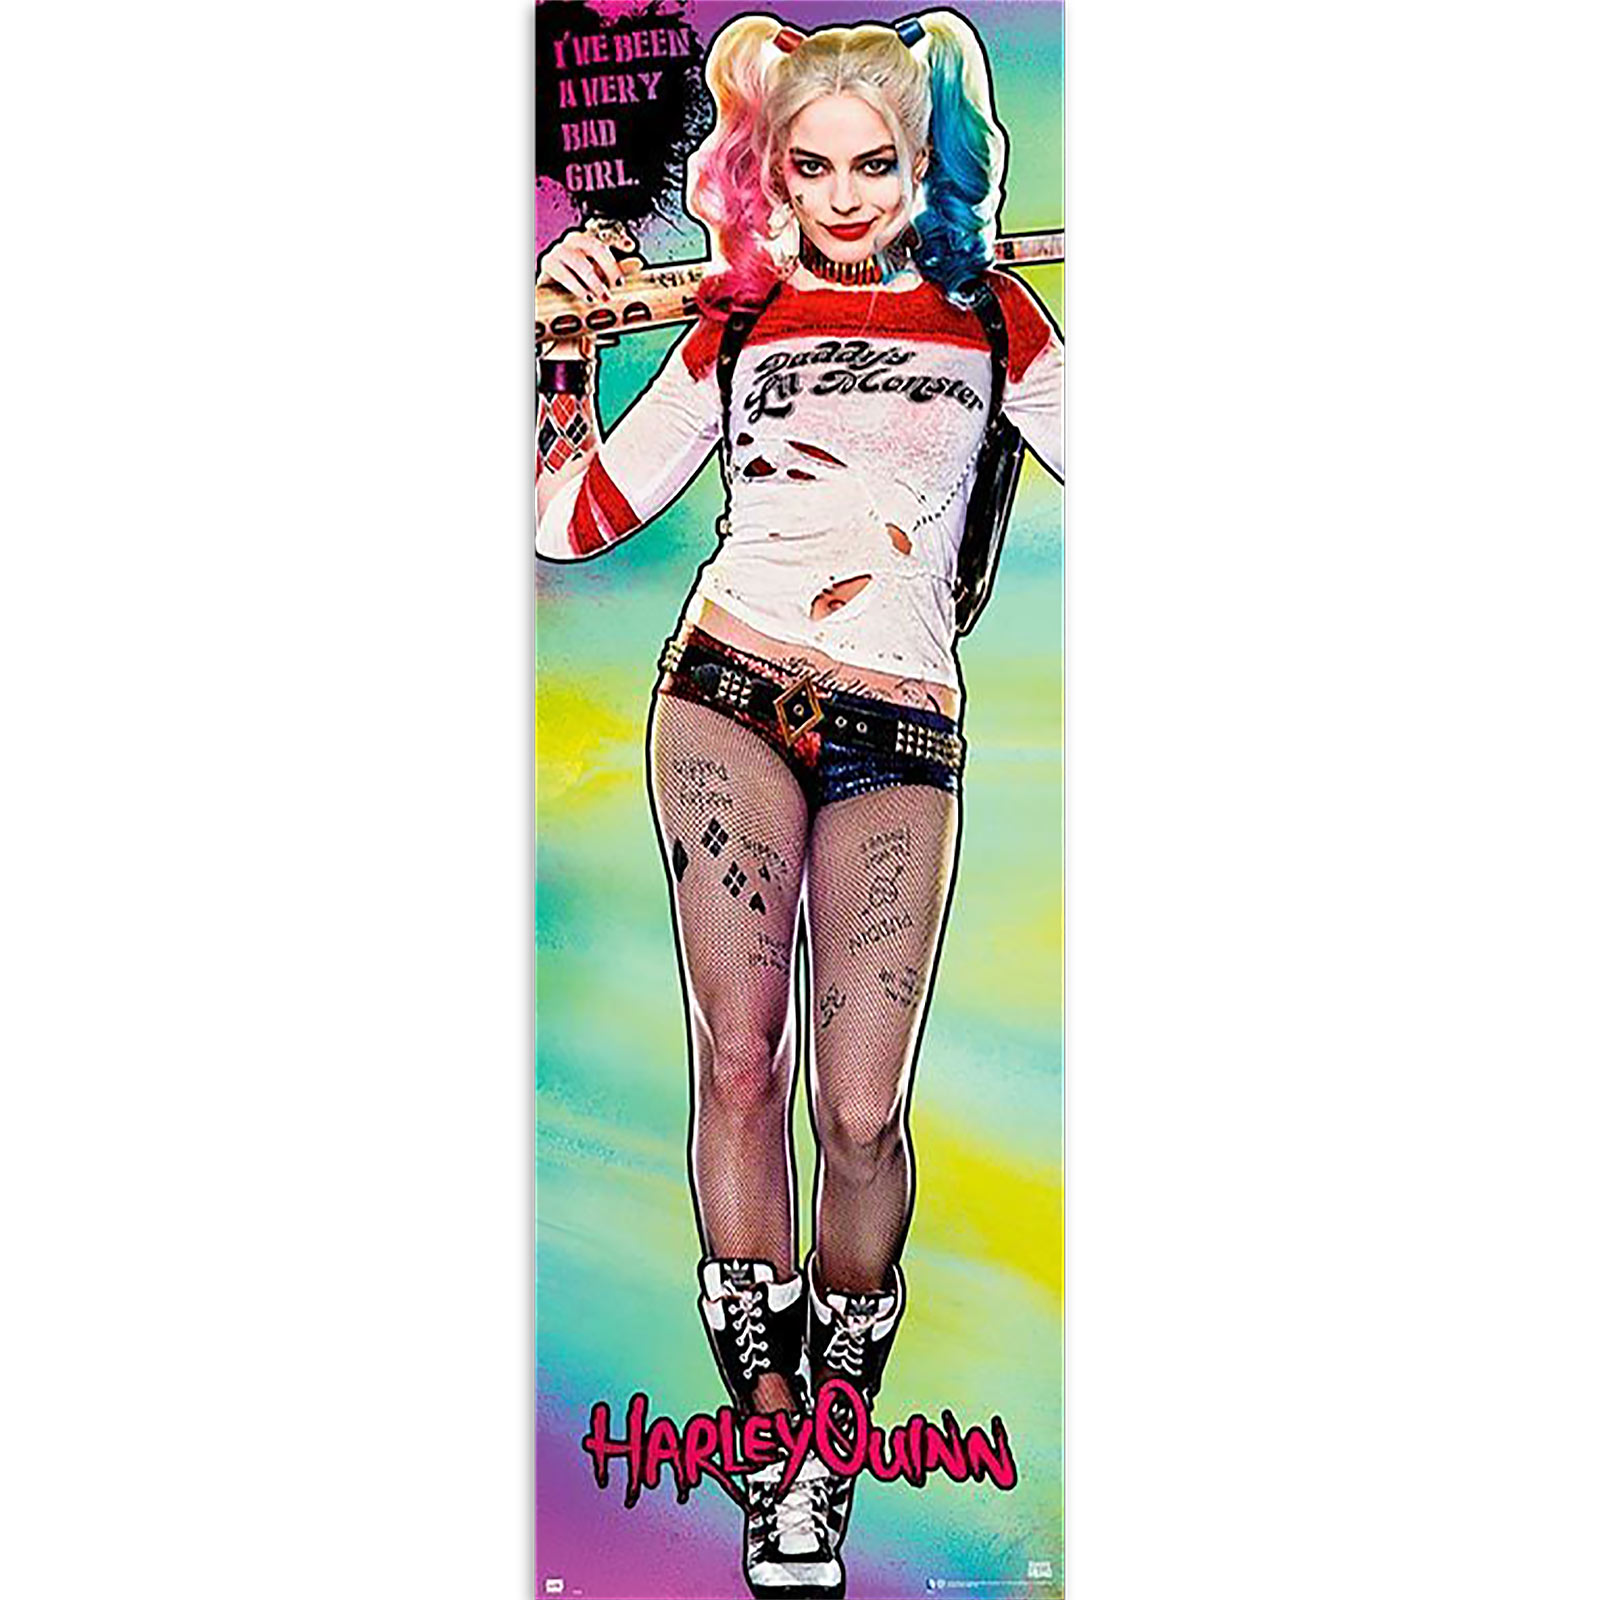 Harley Quinn Door Poster - Suicide Squad